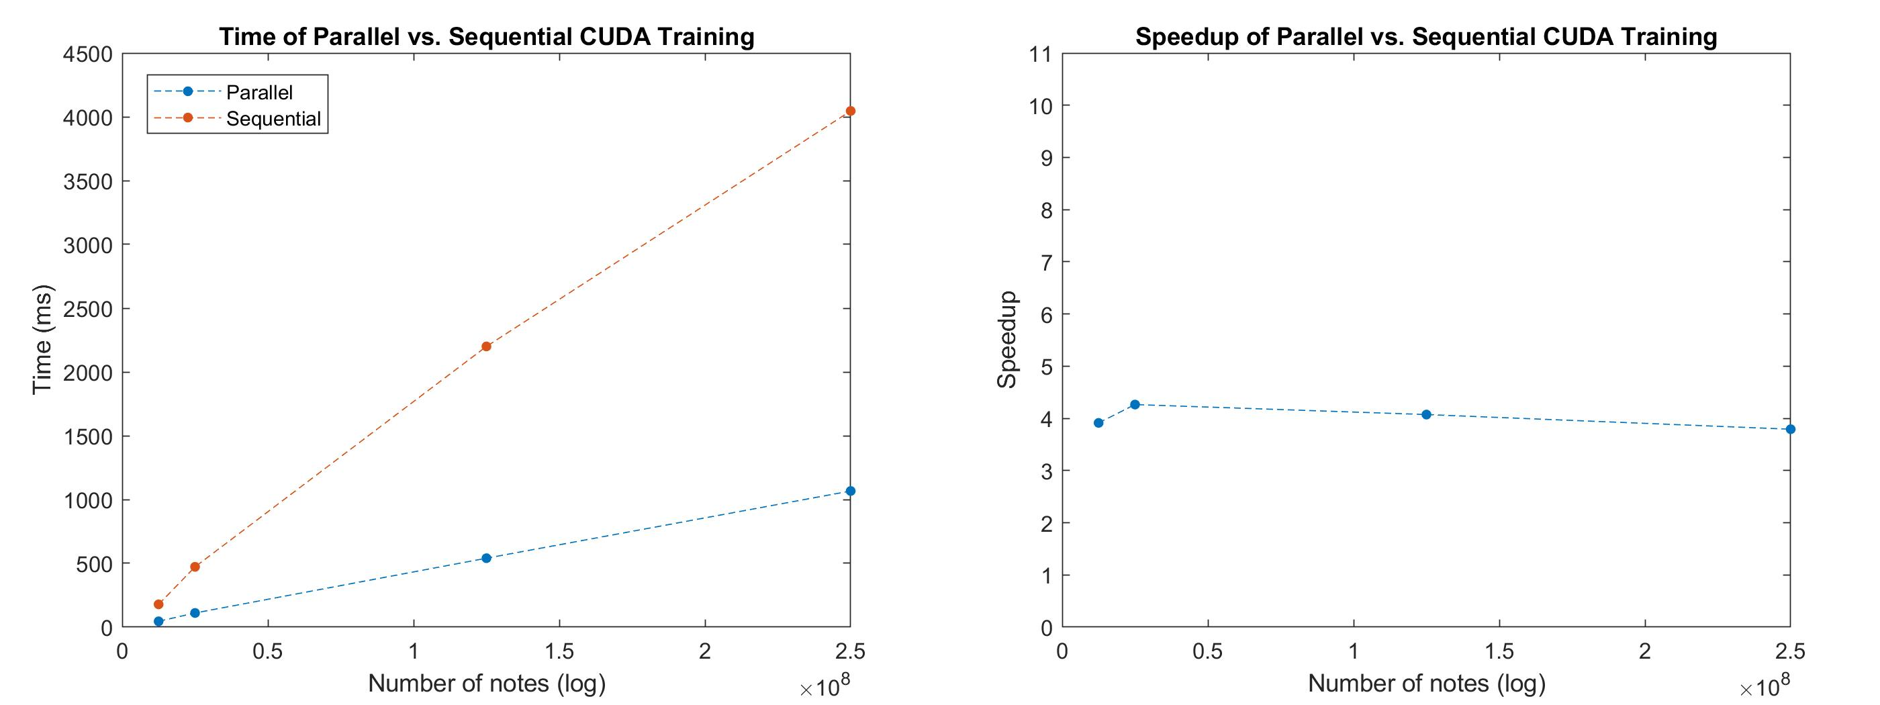 CUDA Speedup Analysis